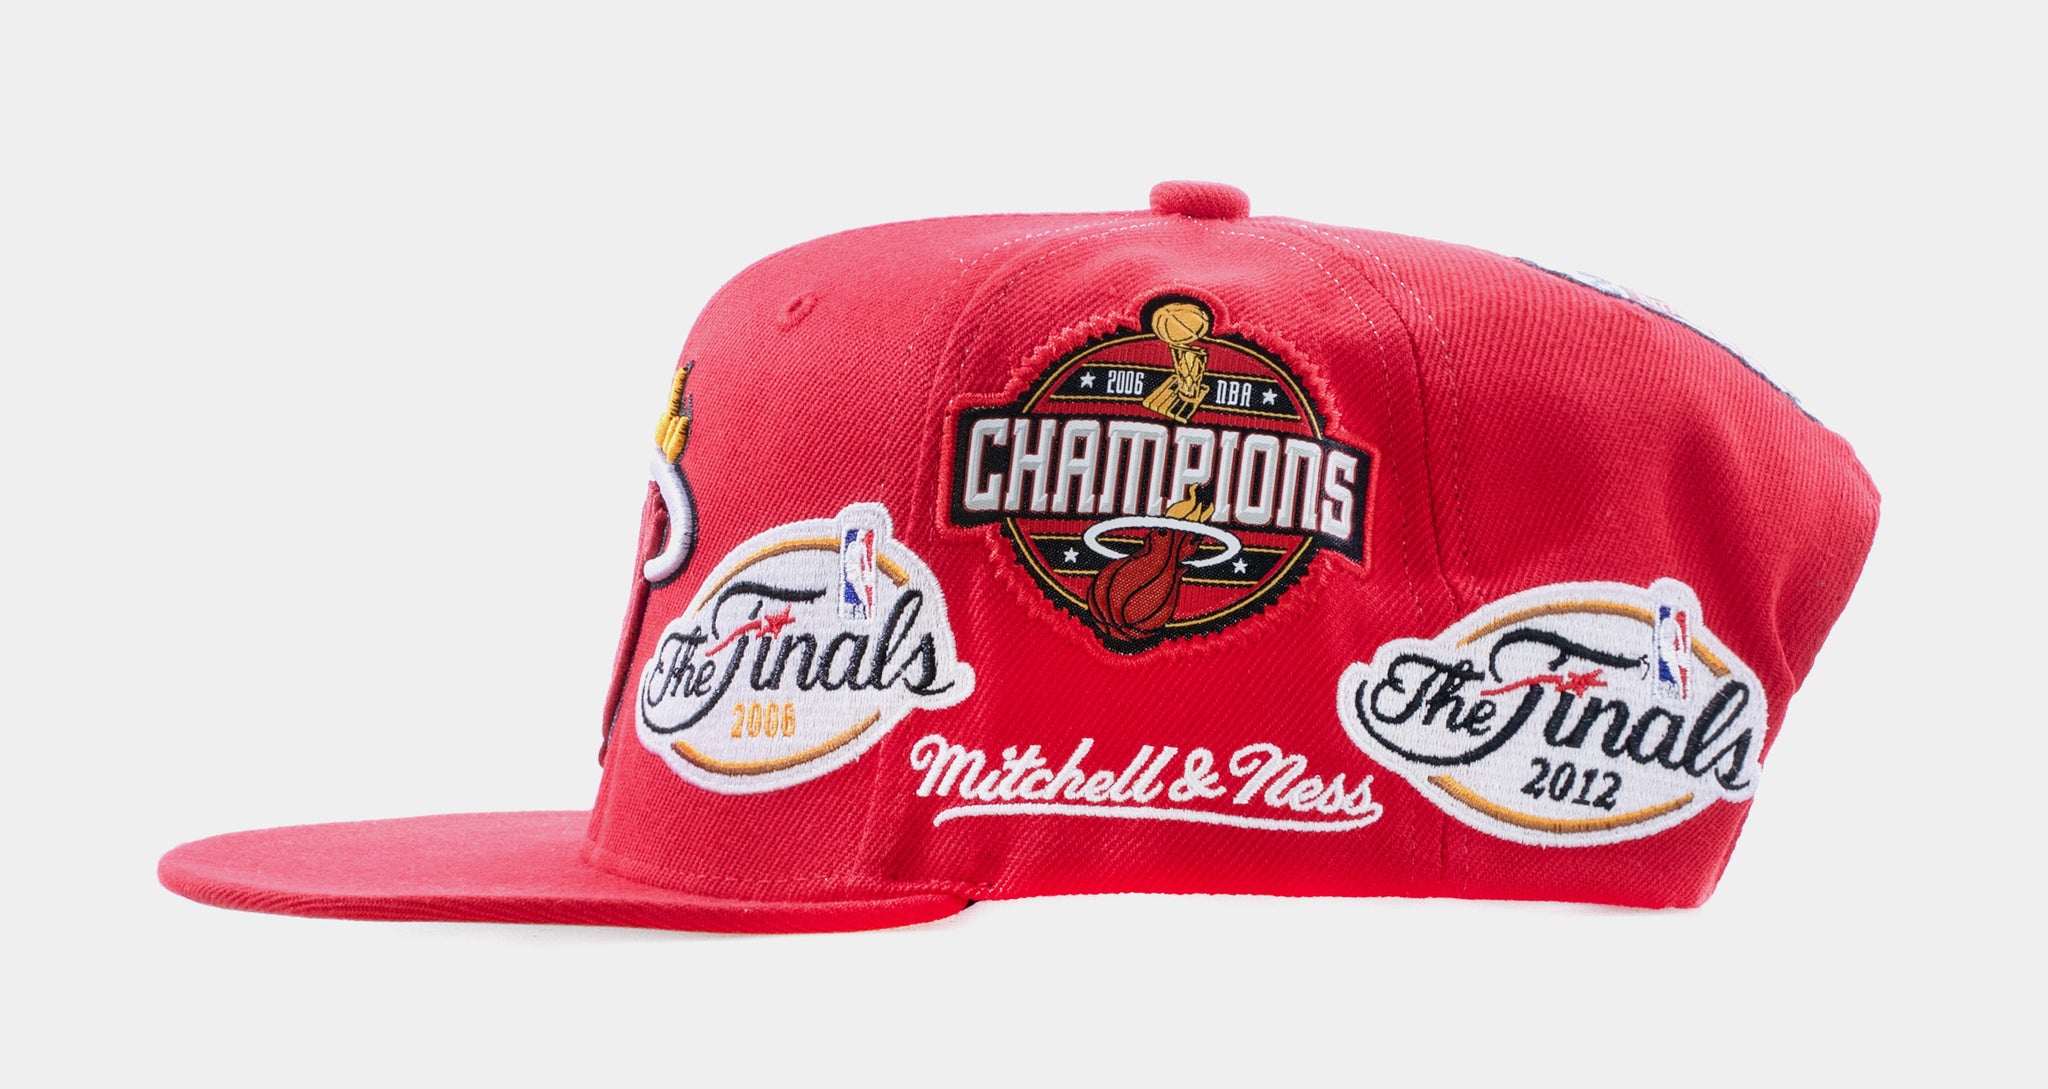 Miami Heat Mitchell & Ness Santa Ana Under Prime Snapback Hat